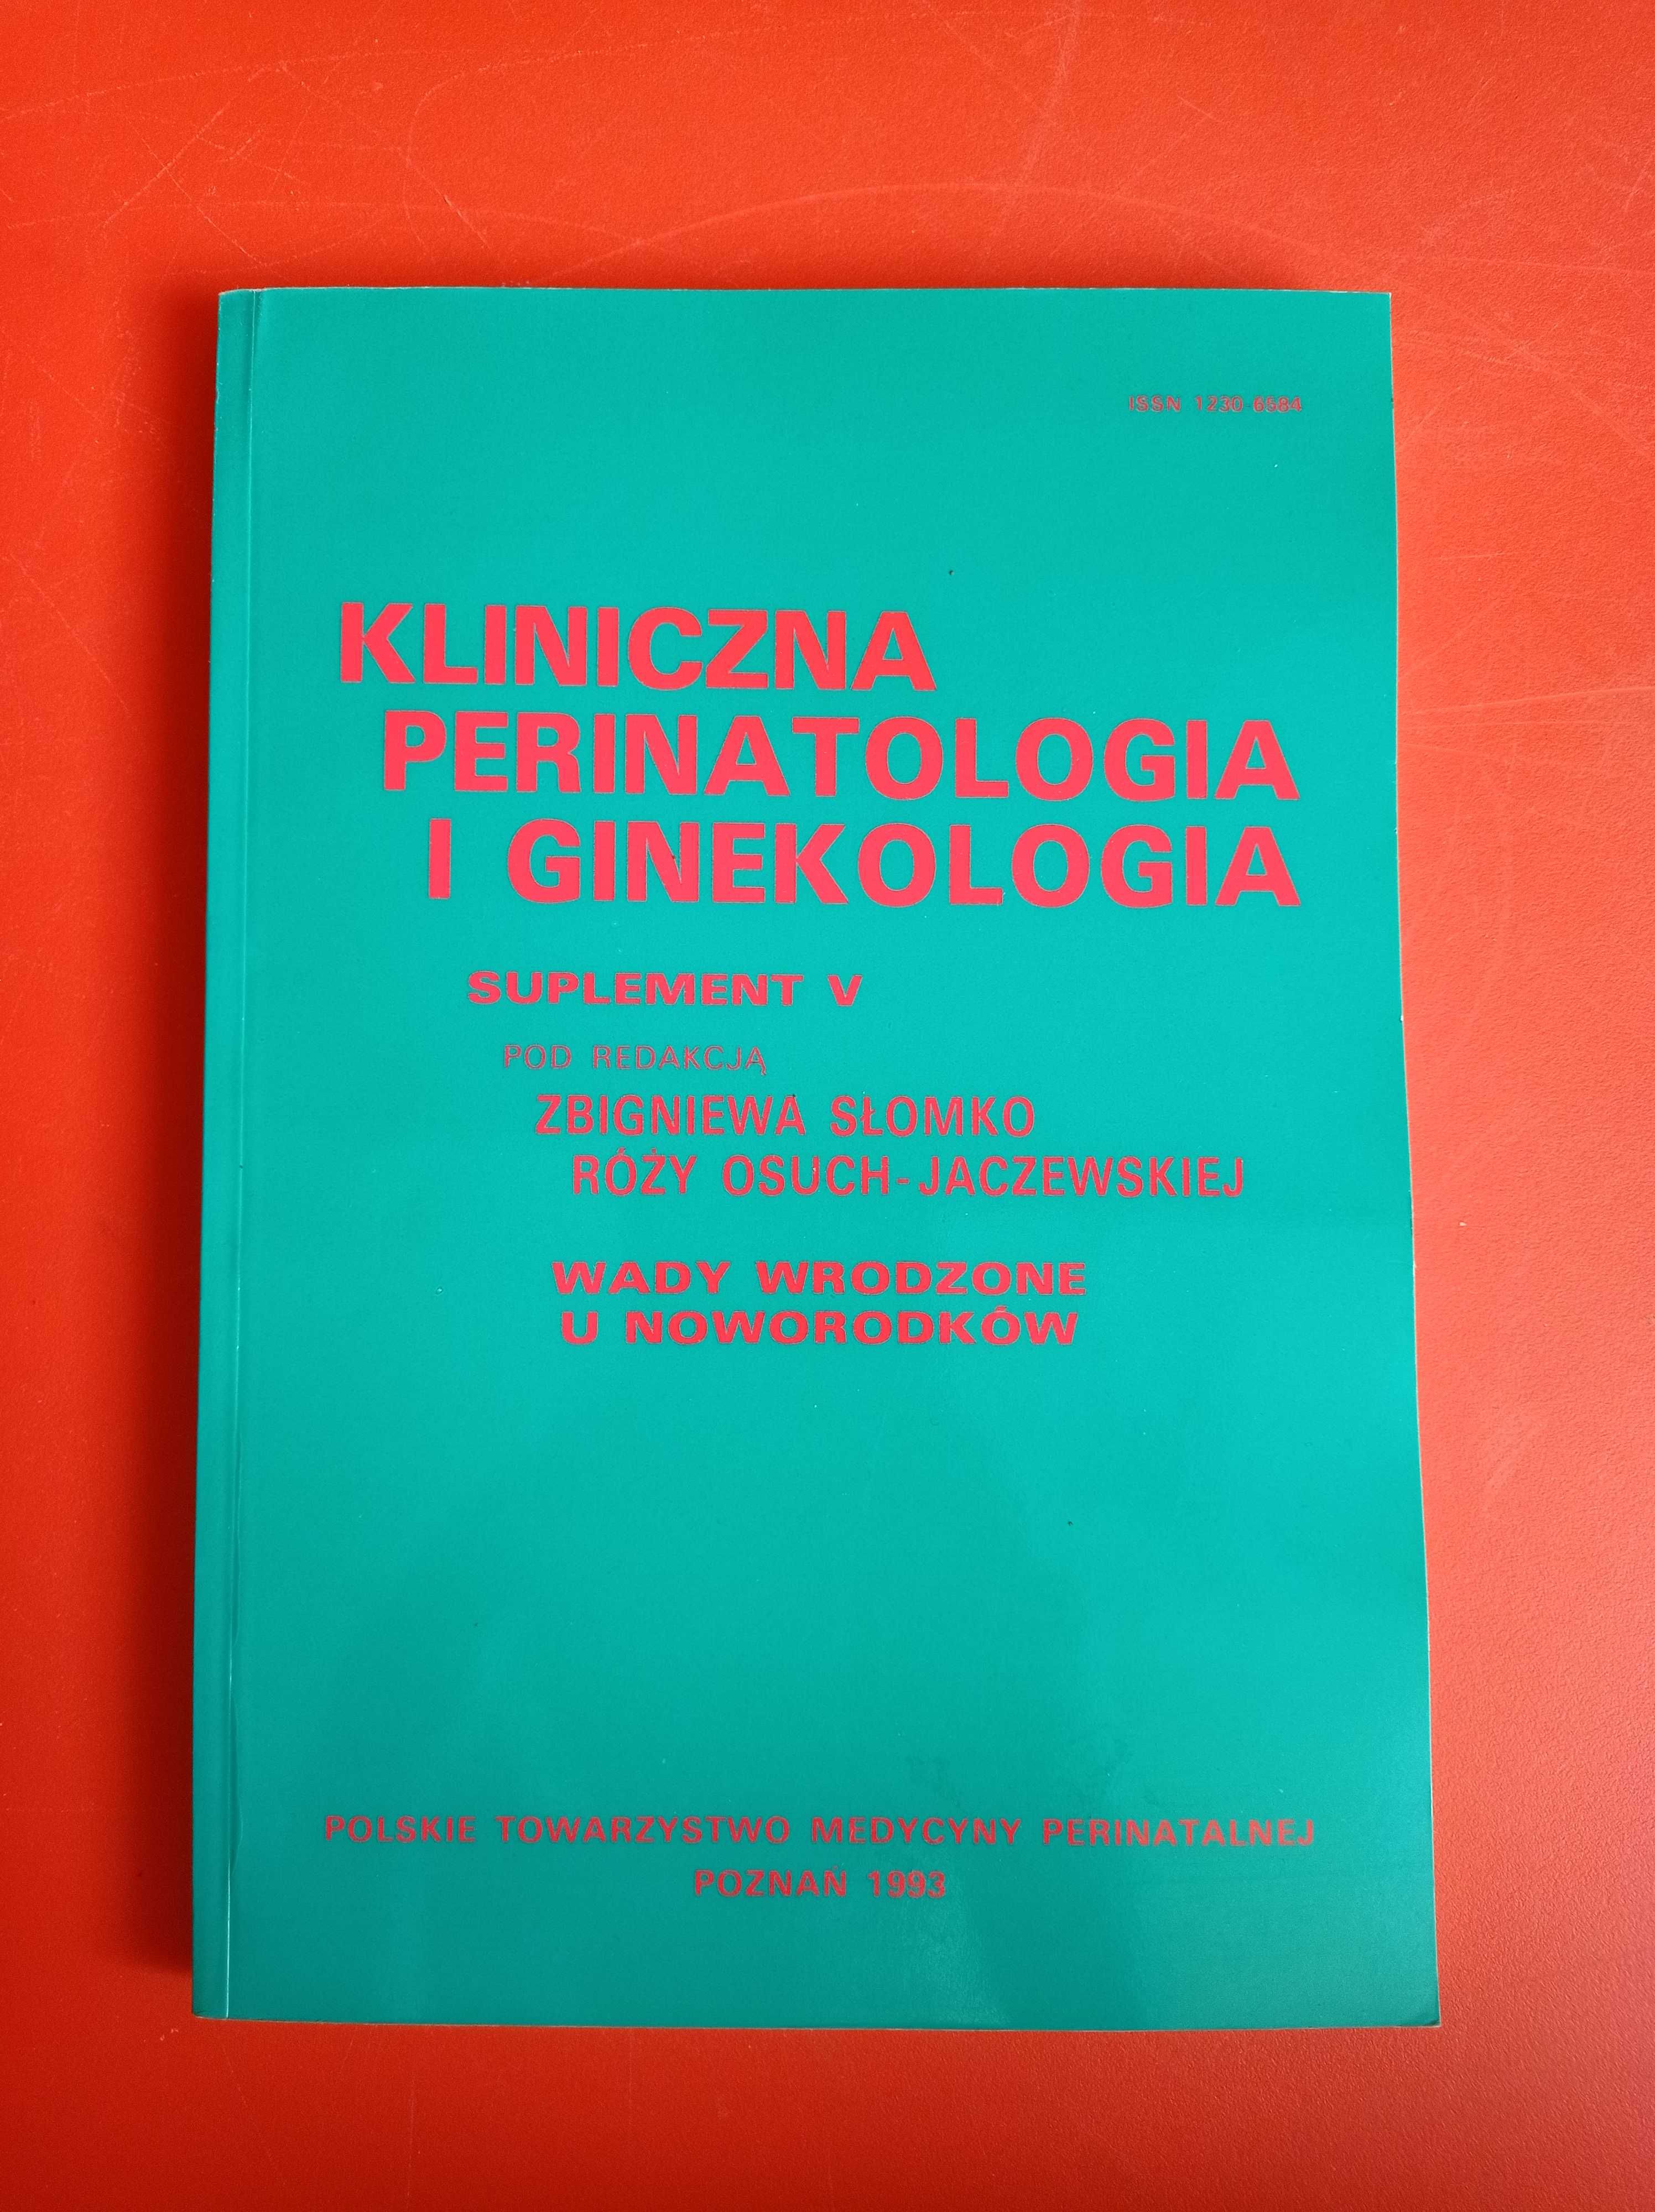 Kliniczna perinatologia i ginekologia, suplement V, Słomko